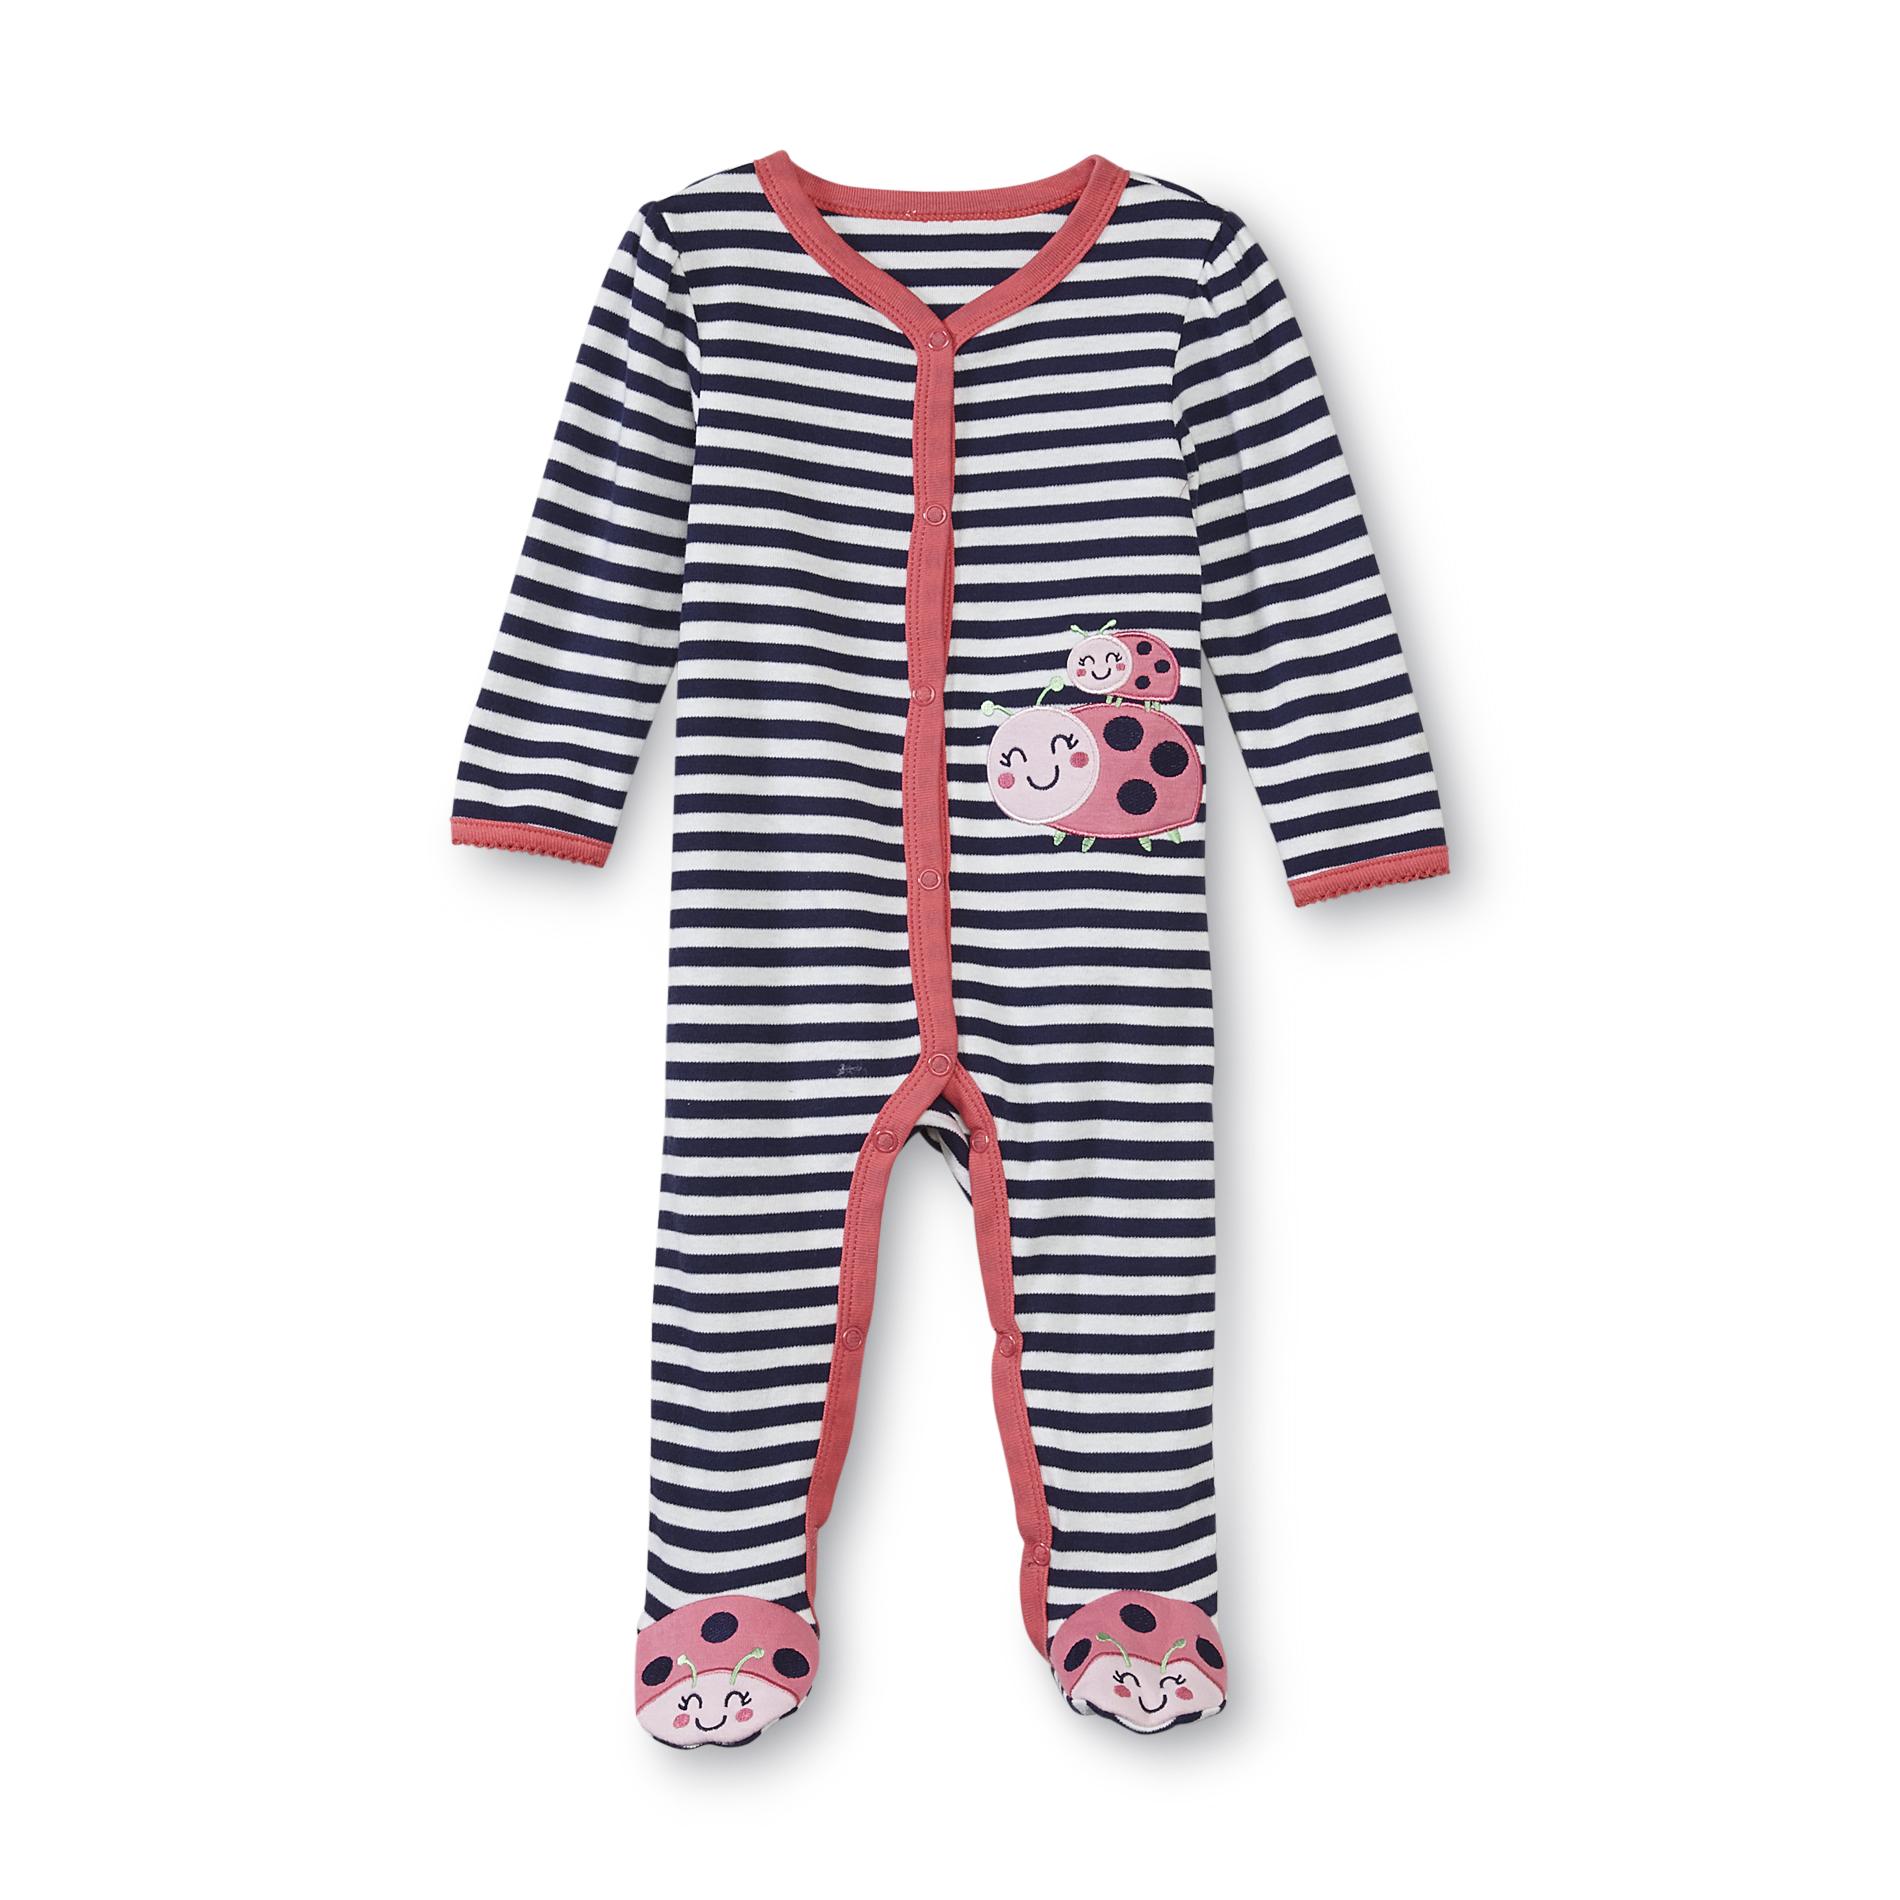 Small Wonders Newborn Girl's Footed Sleeper Pajamas - Ladybug